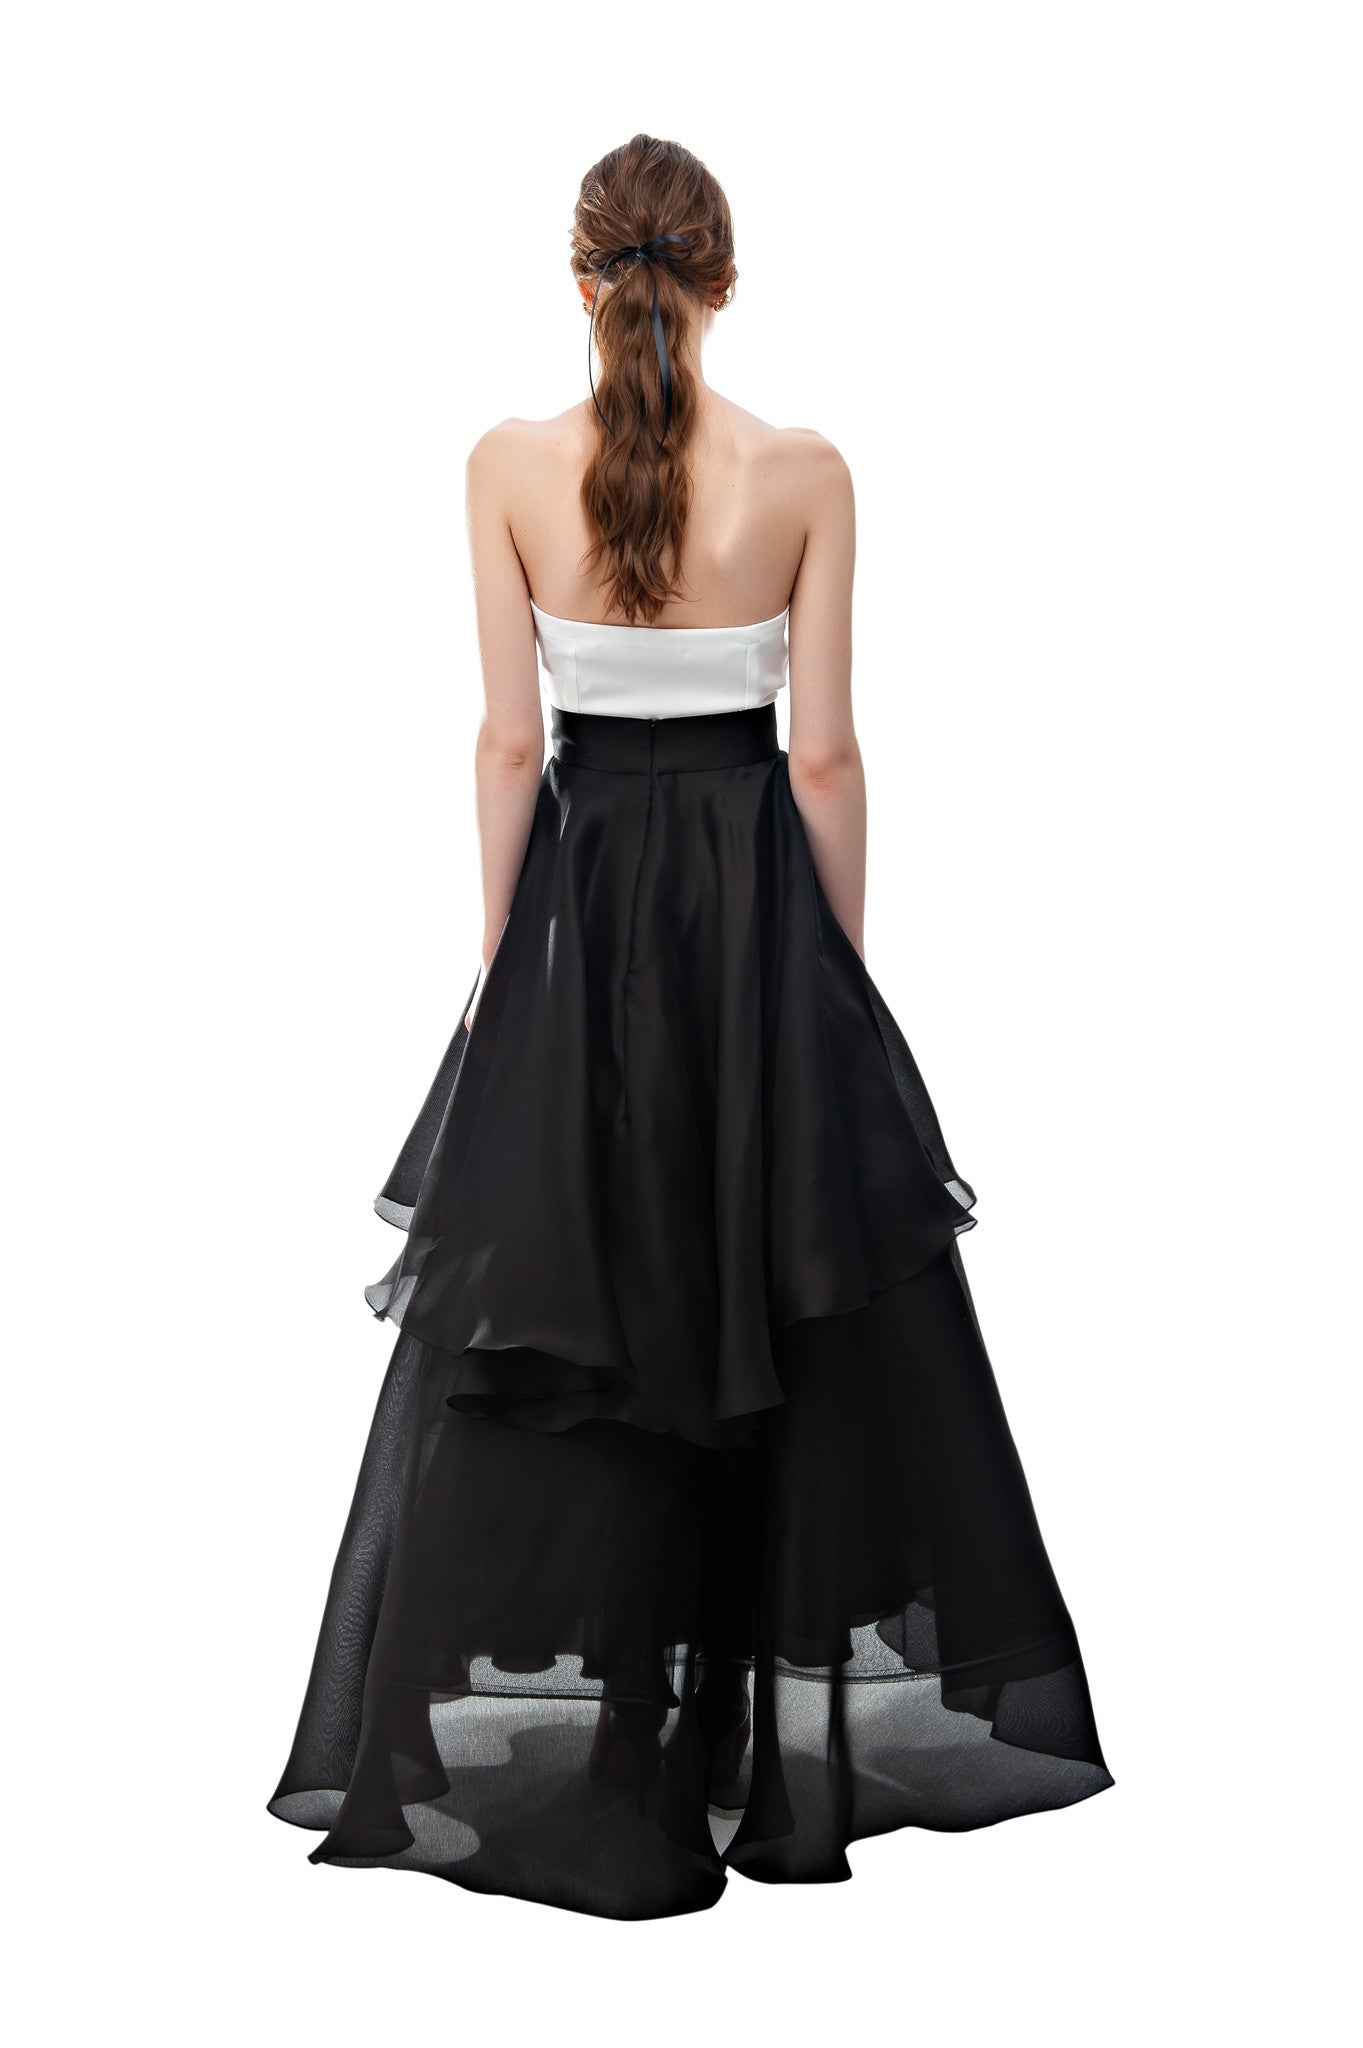 Black Ruffle Cinderella Skirt